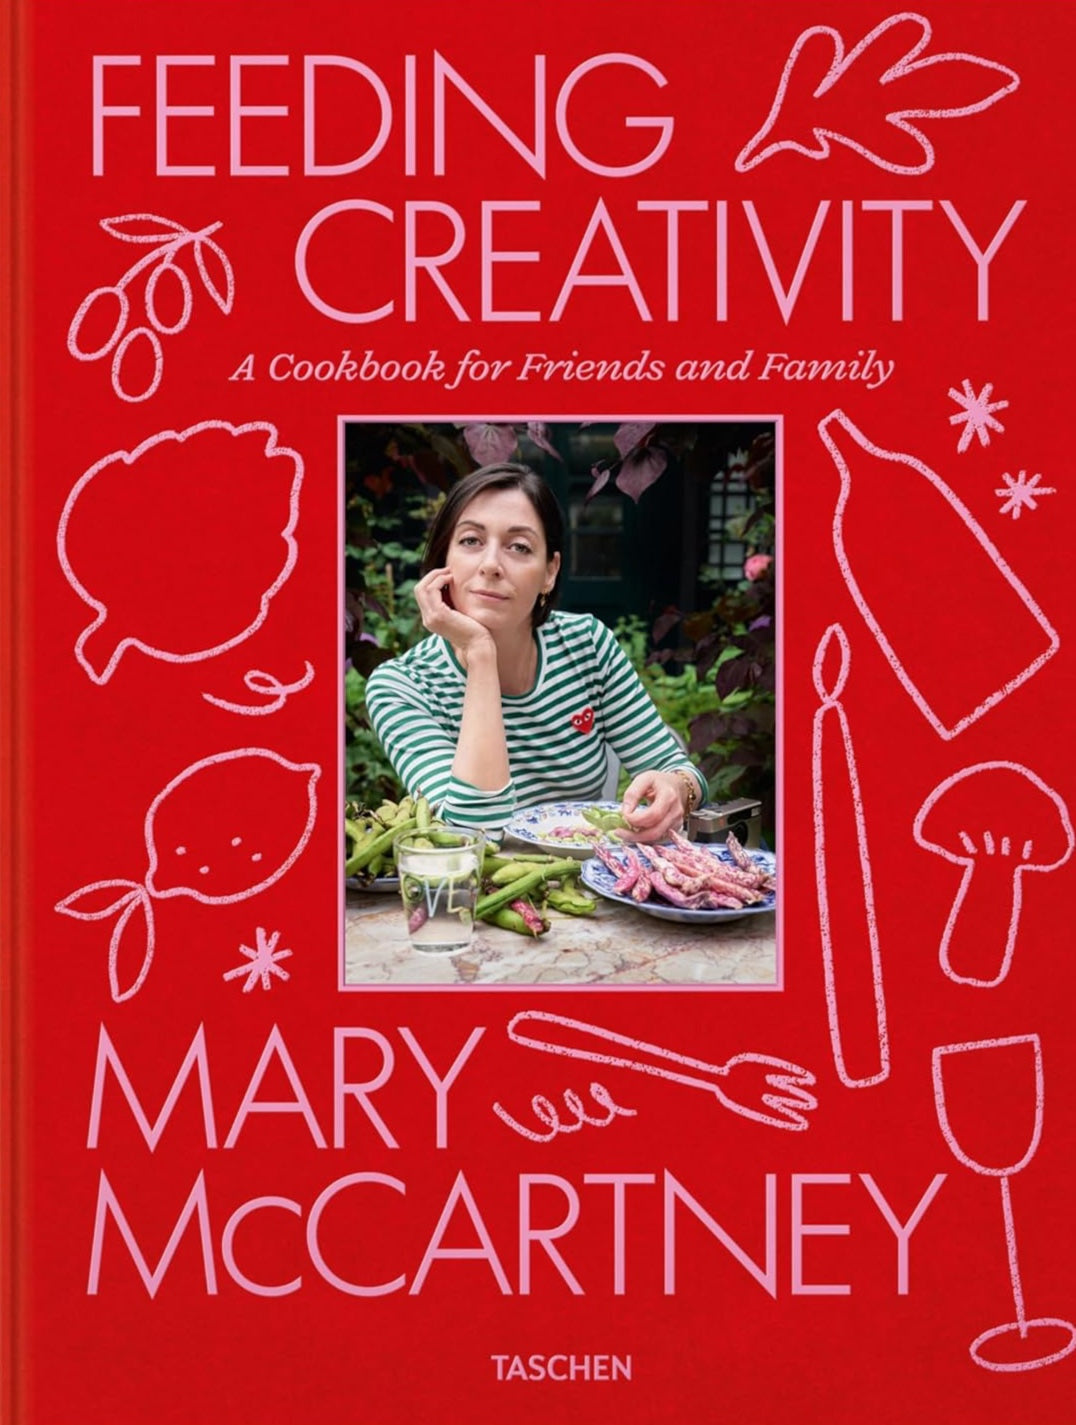 Mary McCartney - Feeding Creativity